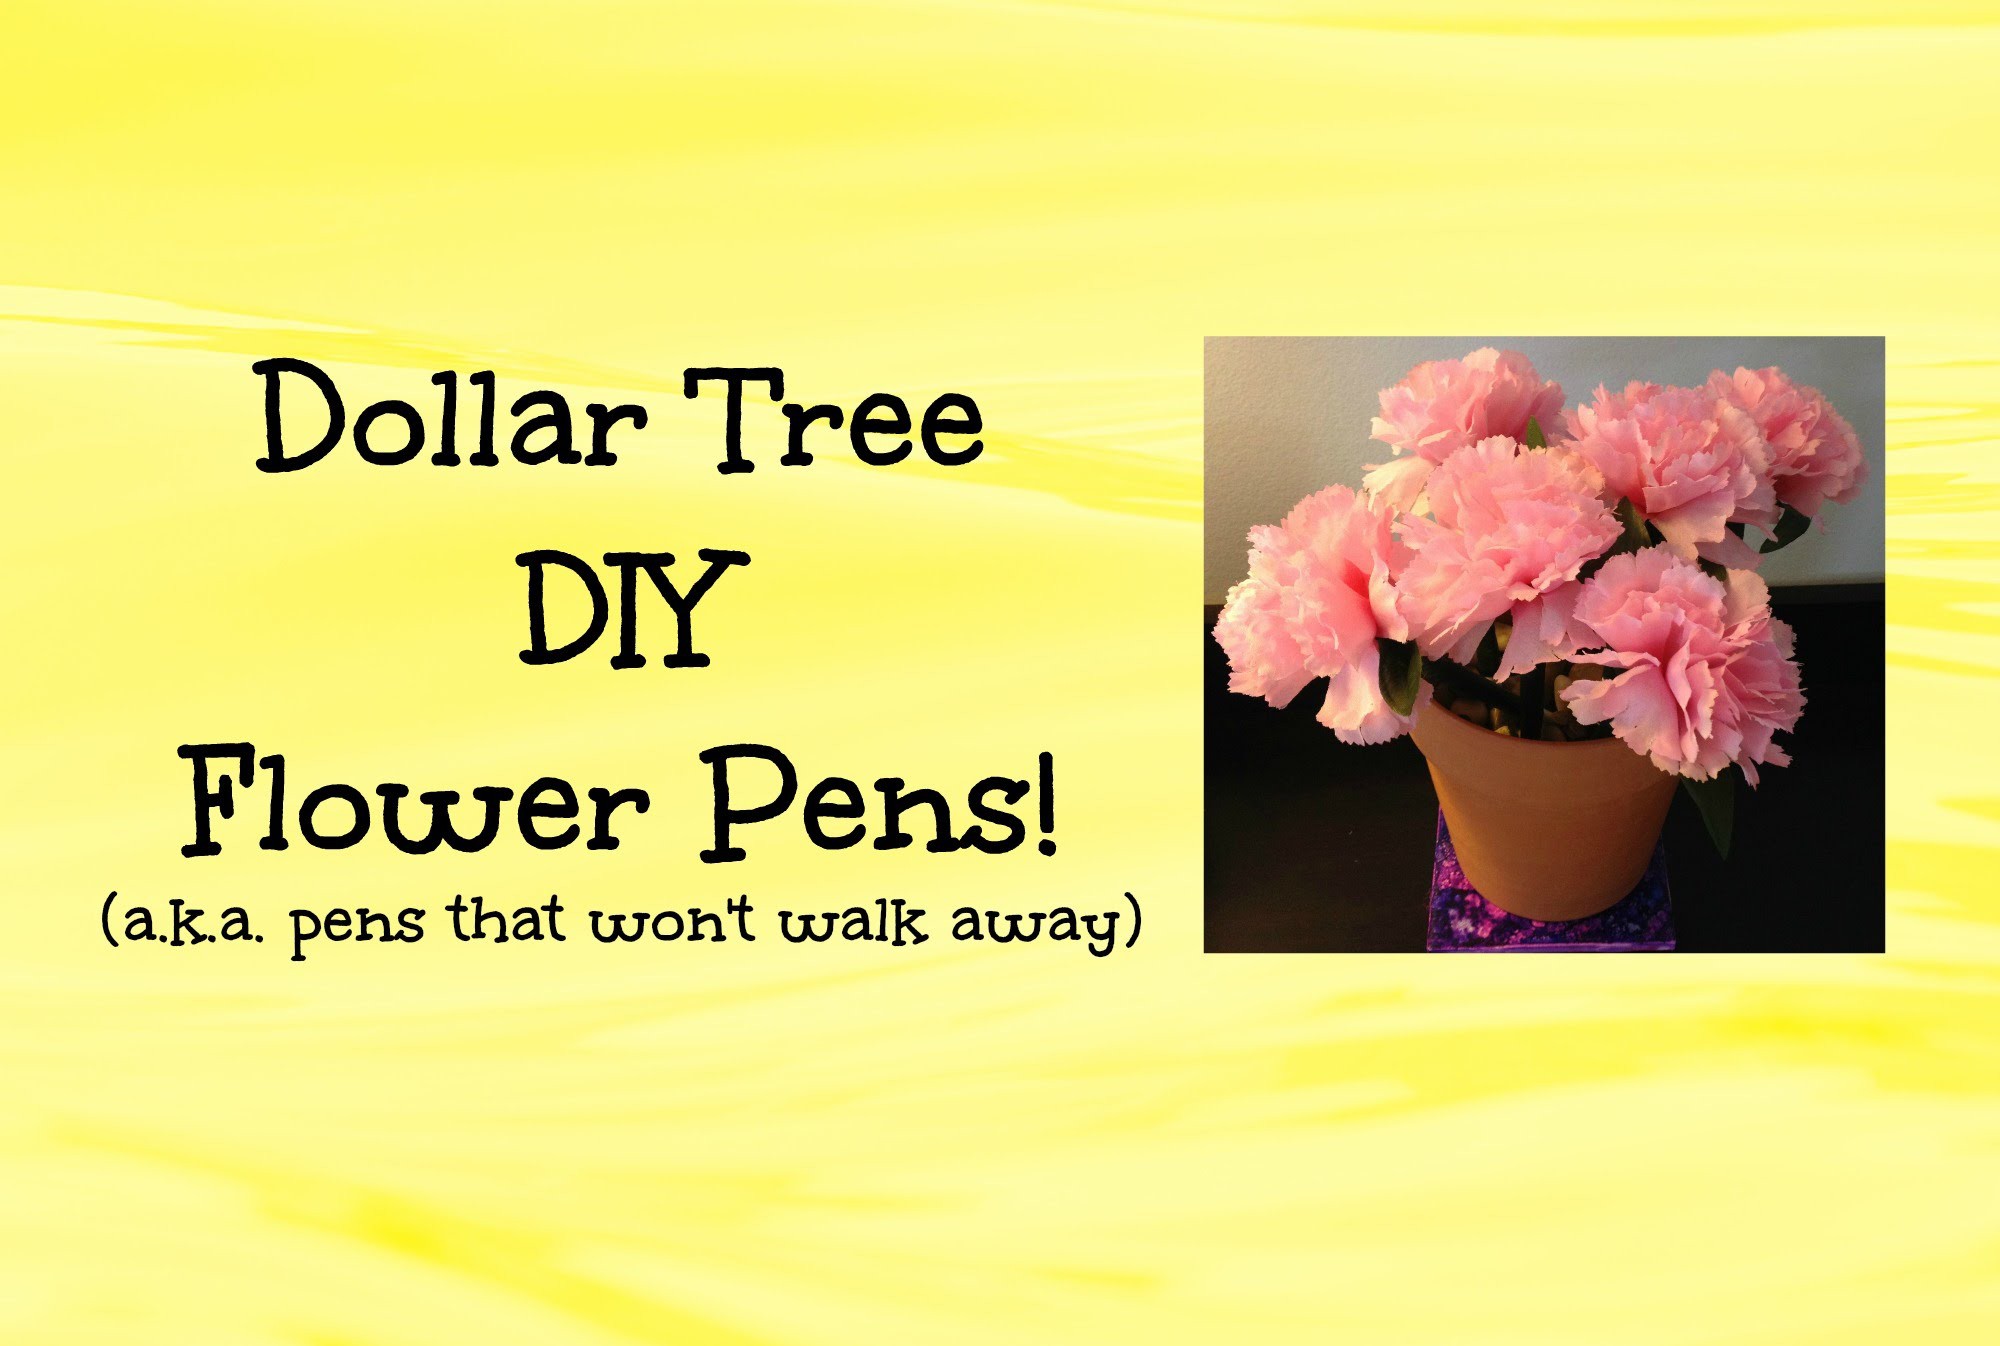 Dollar Tree DIY Project - Flower Pens - Easy & Fun Craft Idea!